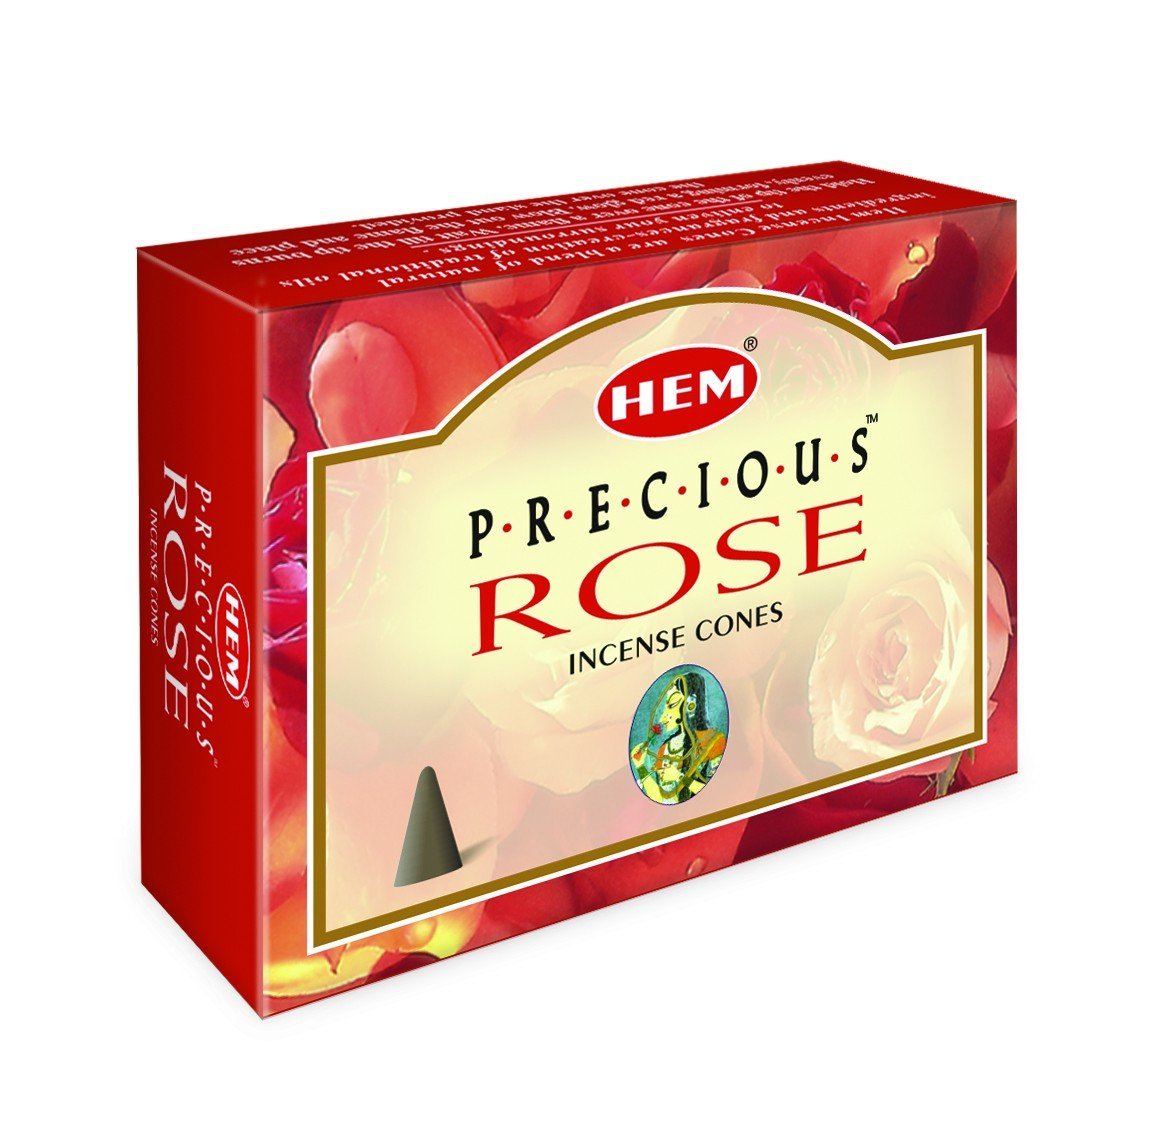 HEM - Precious Rose - 120 Incense Cones